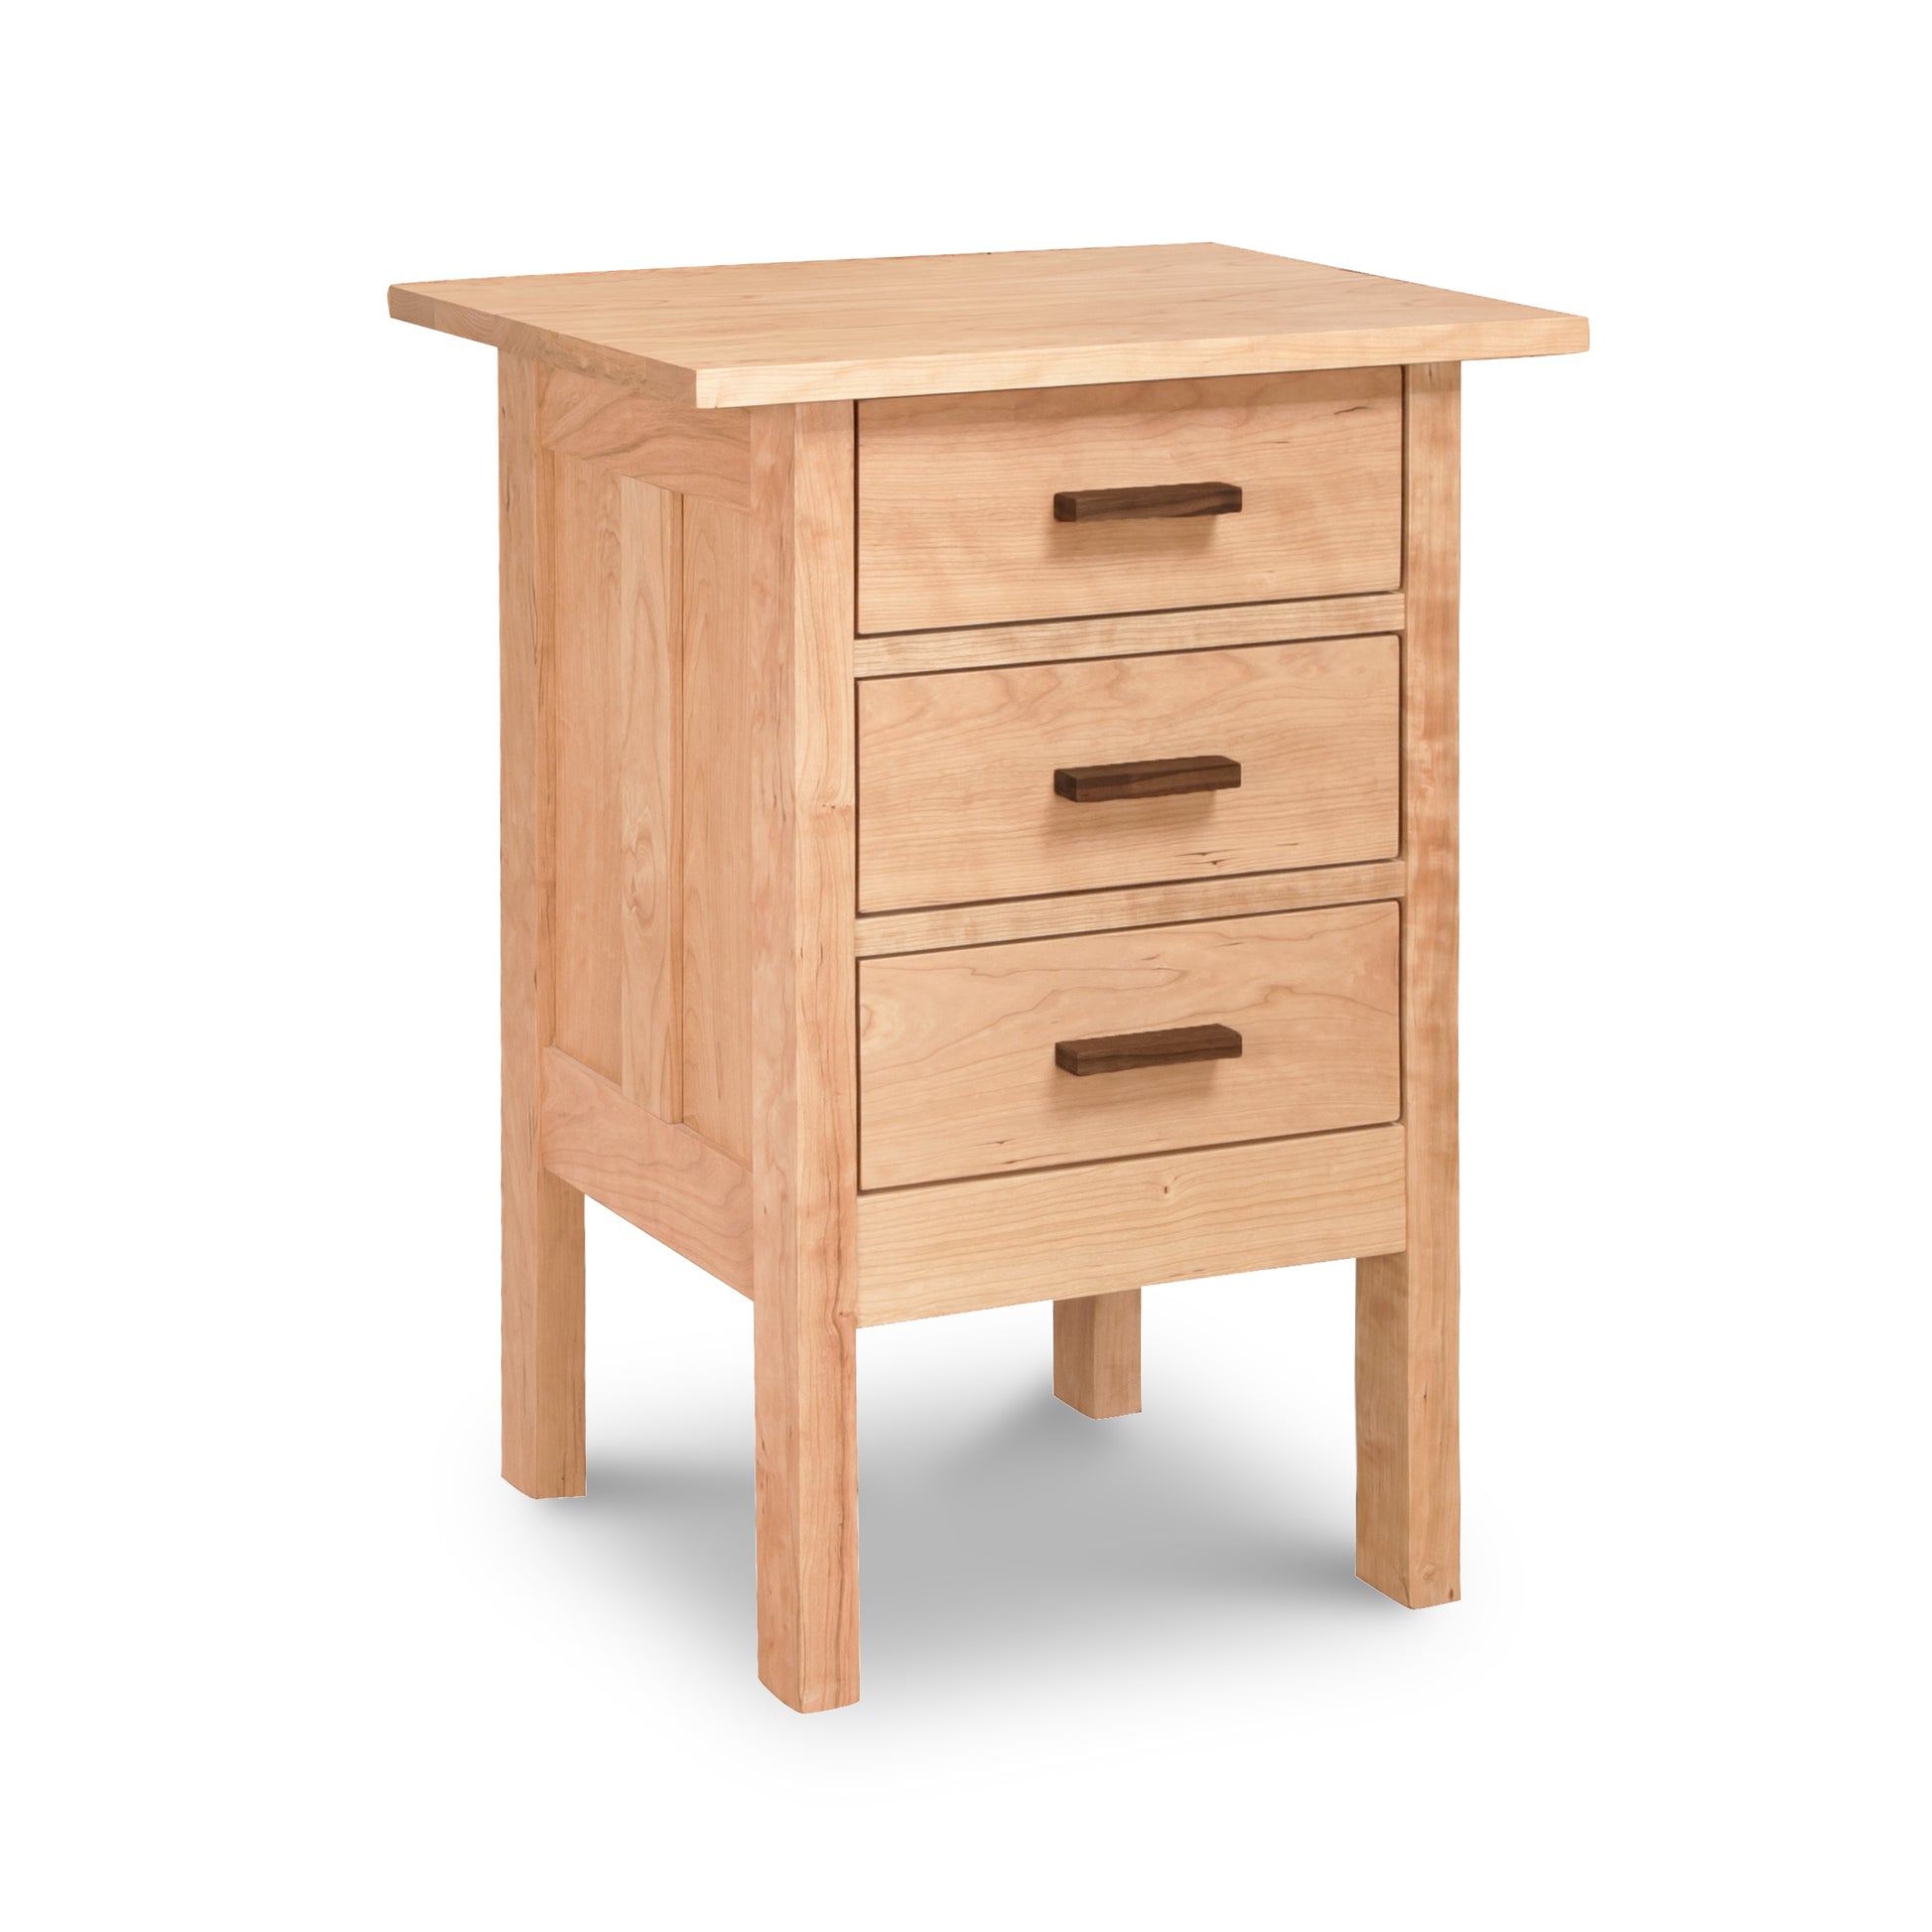 A Vermont Furniture Designs Modern Craftsman 3-Drawer Nightstand on a white background.